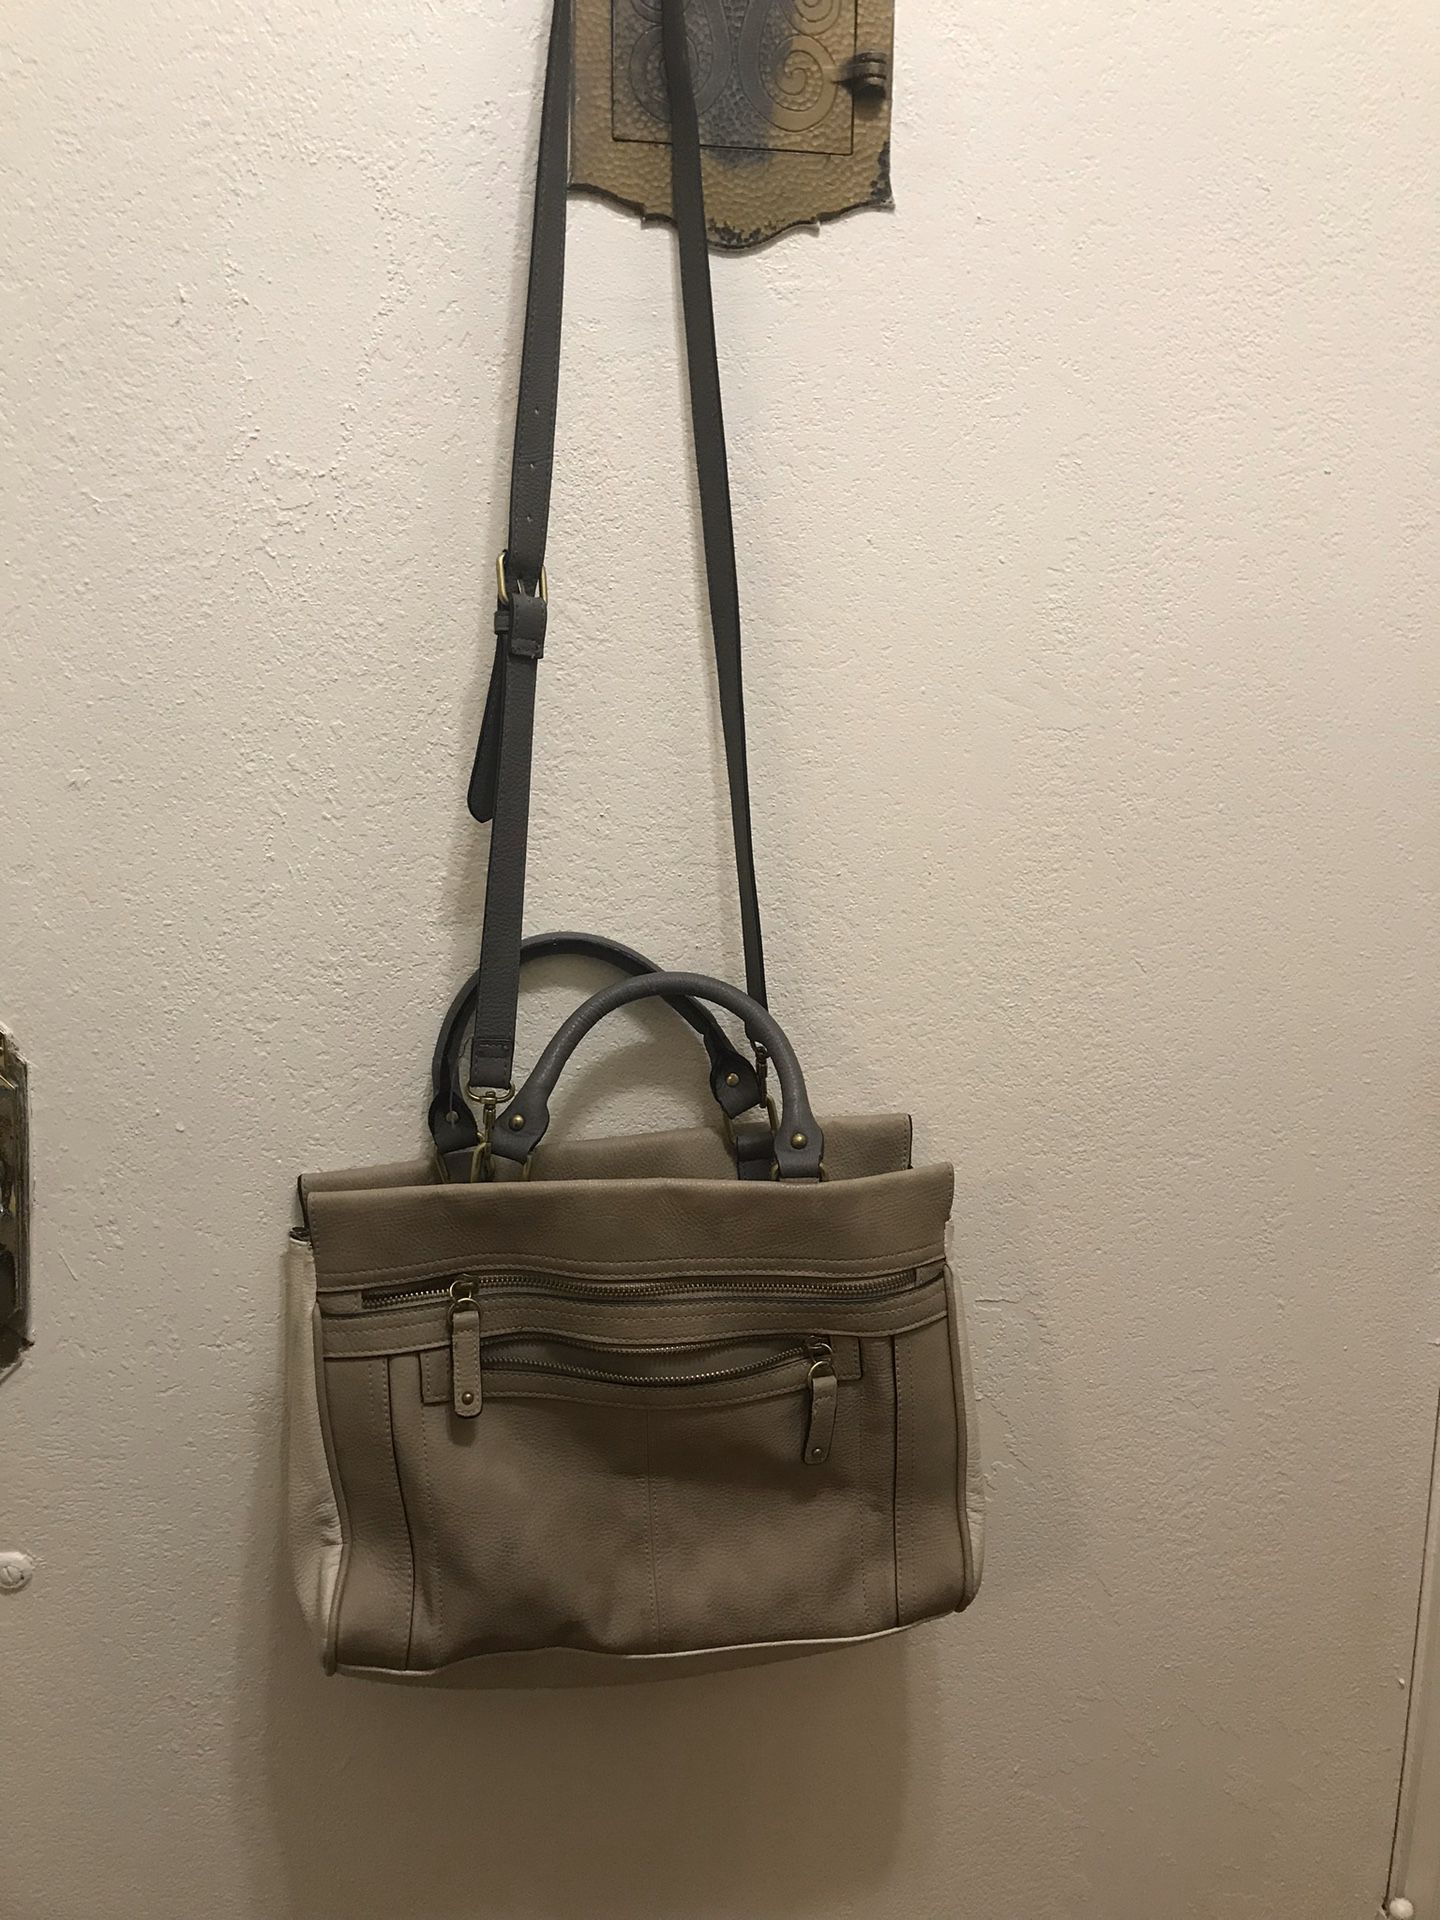 Messenger bag/purse